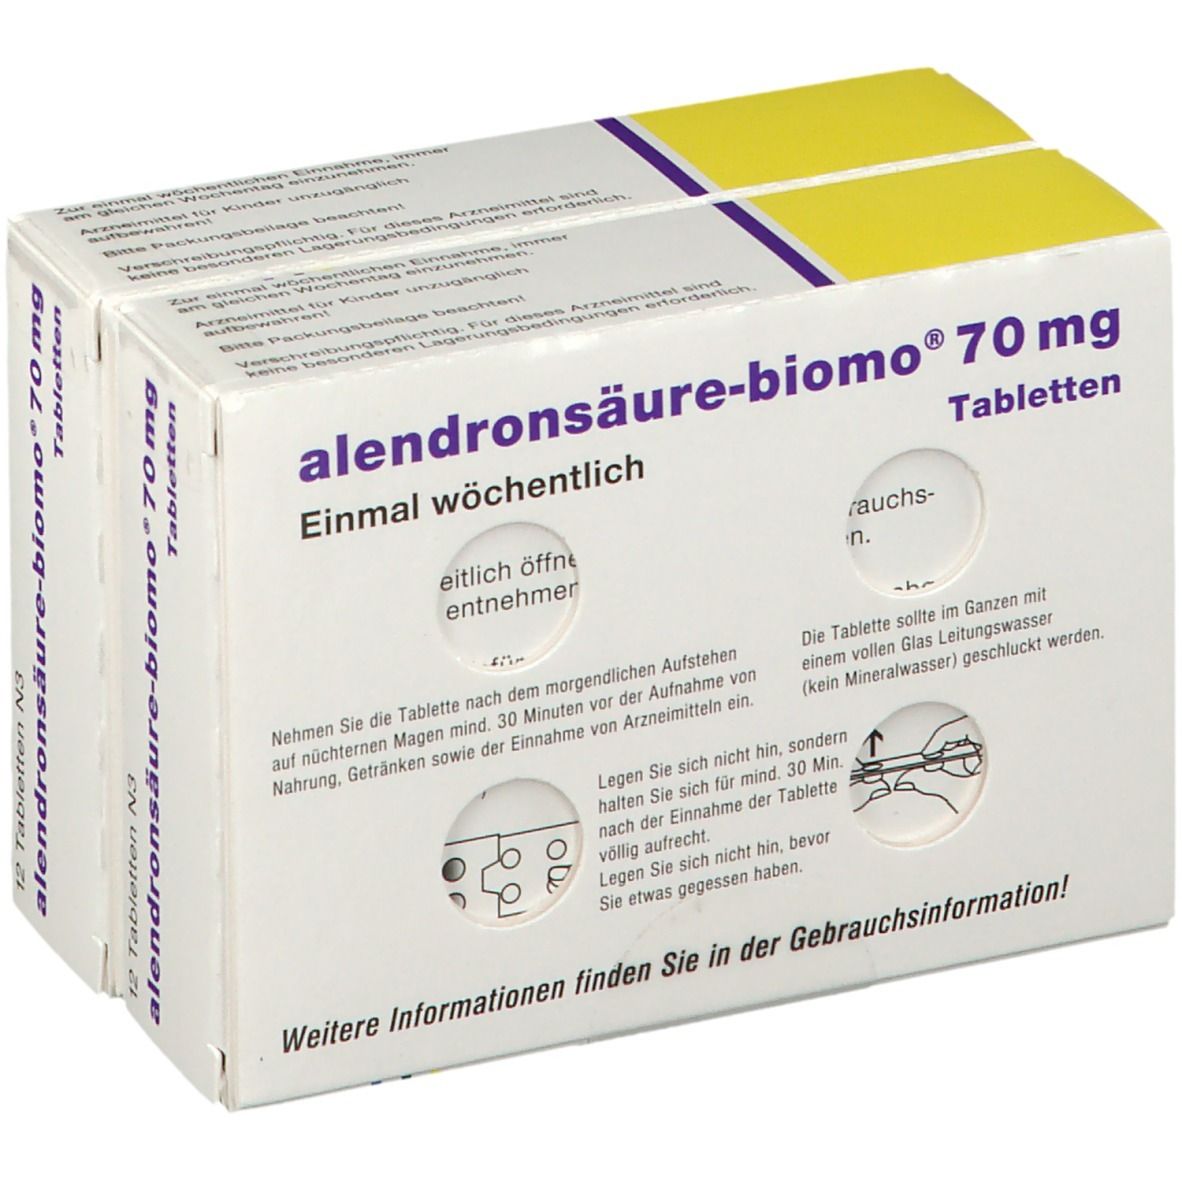 alendronsäure-biomo® 70 mg